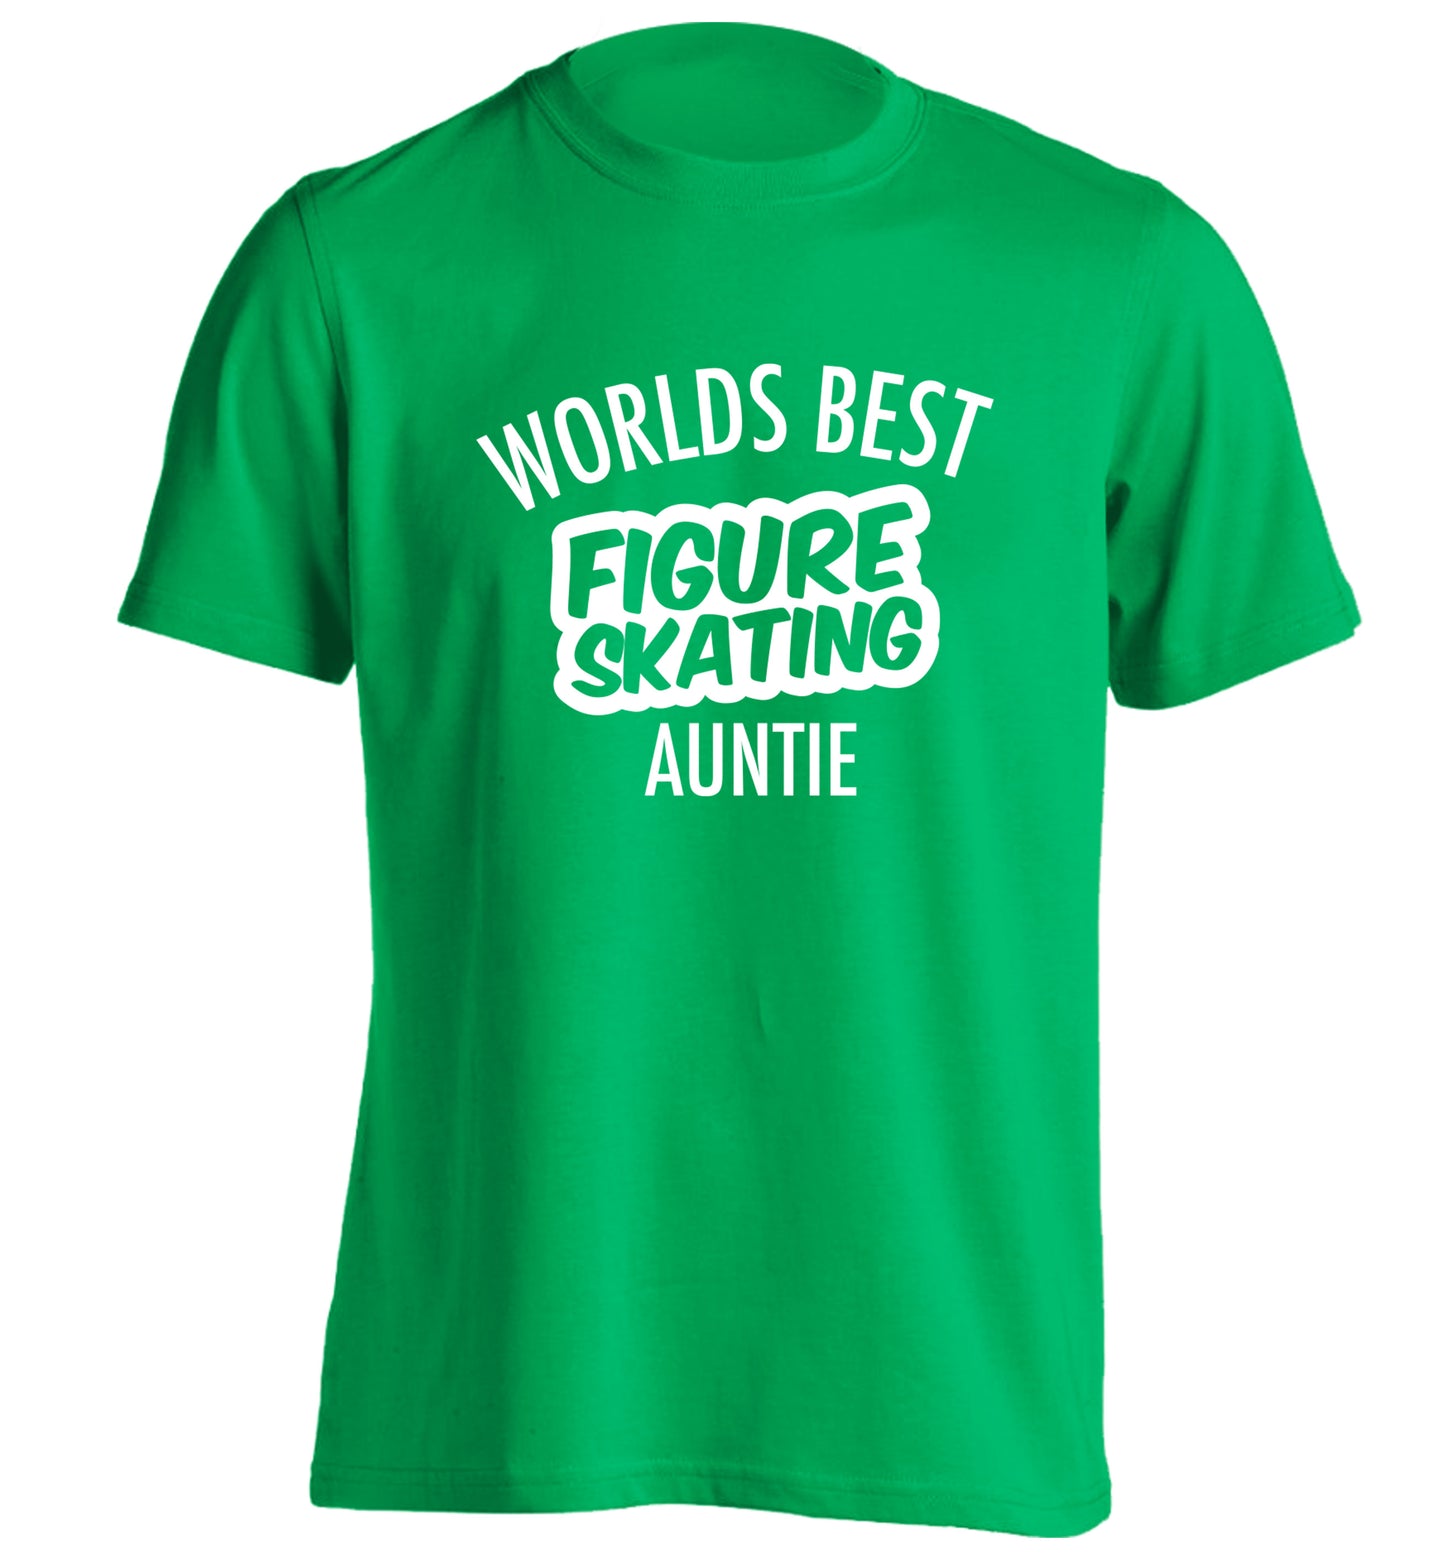 Worlds best figure skating auntie adults unisexgreen Tshirt 2XL